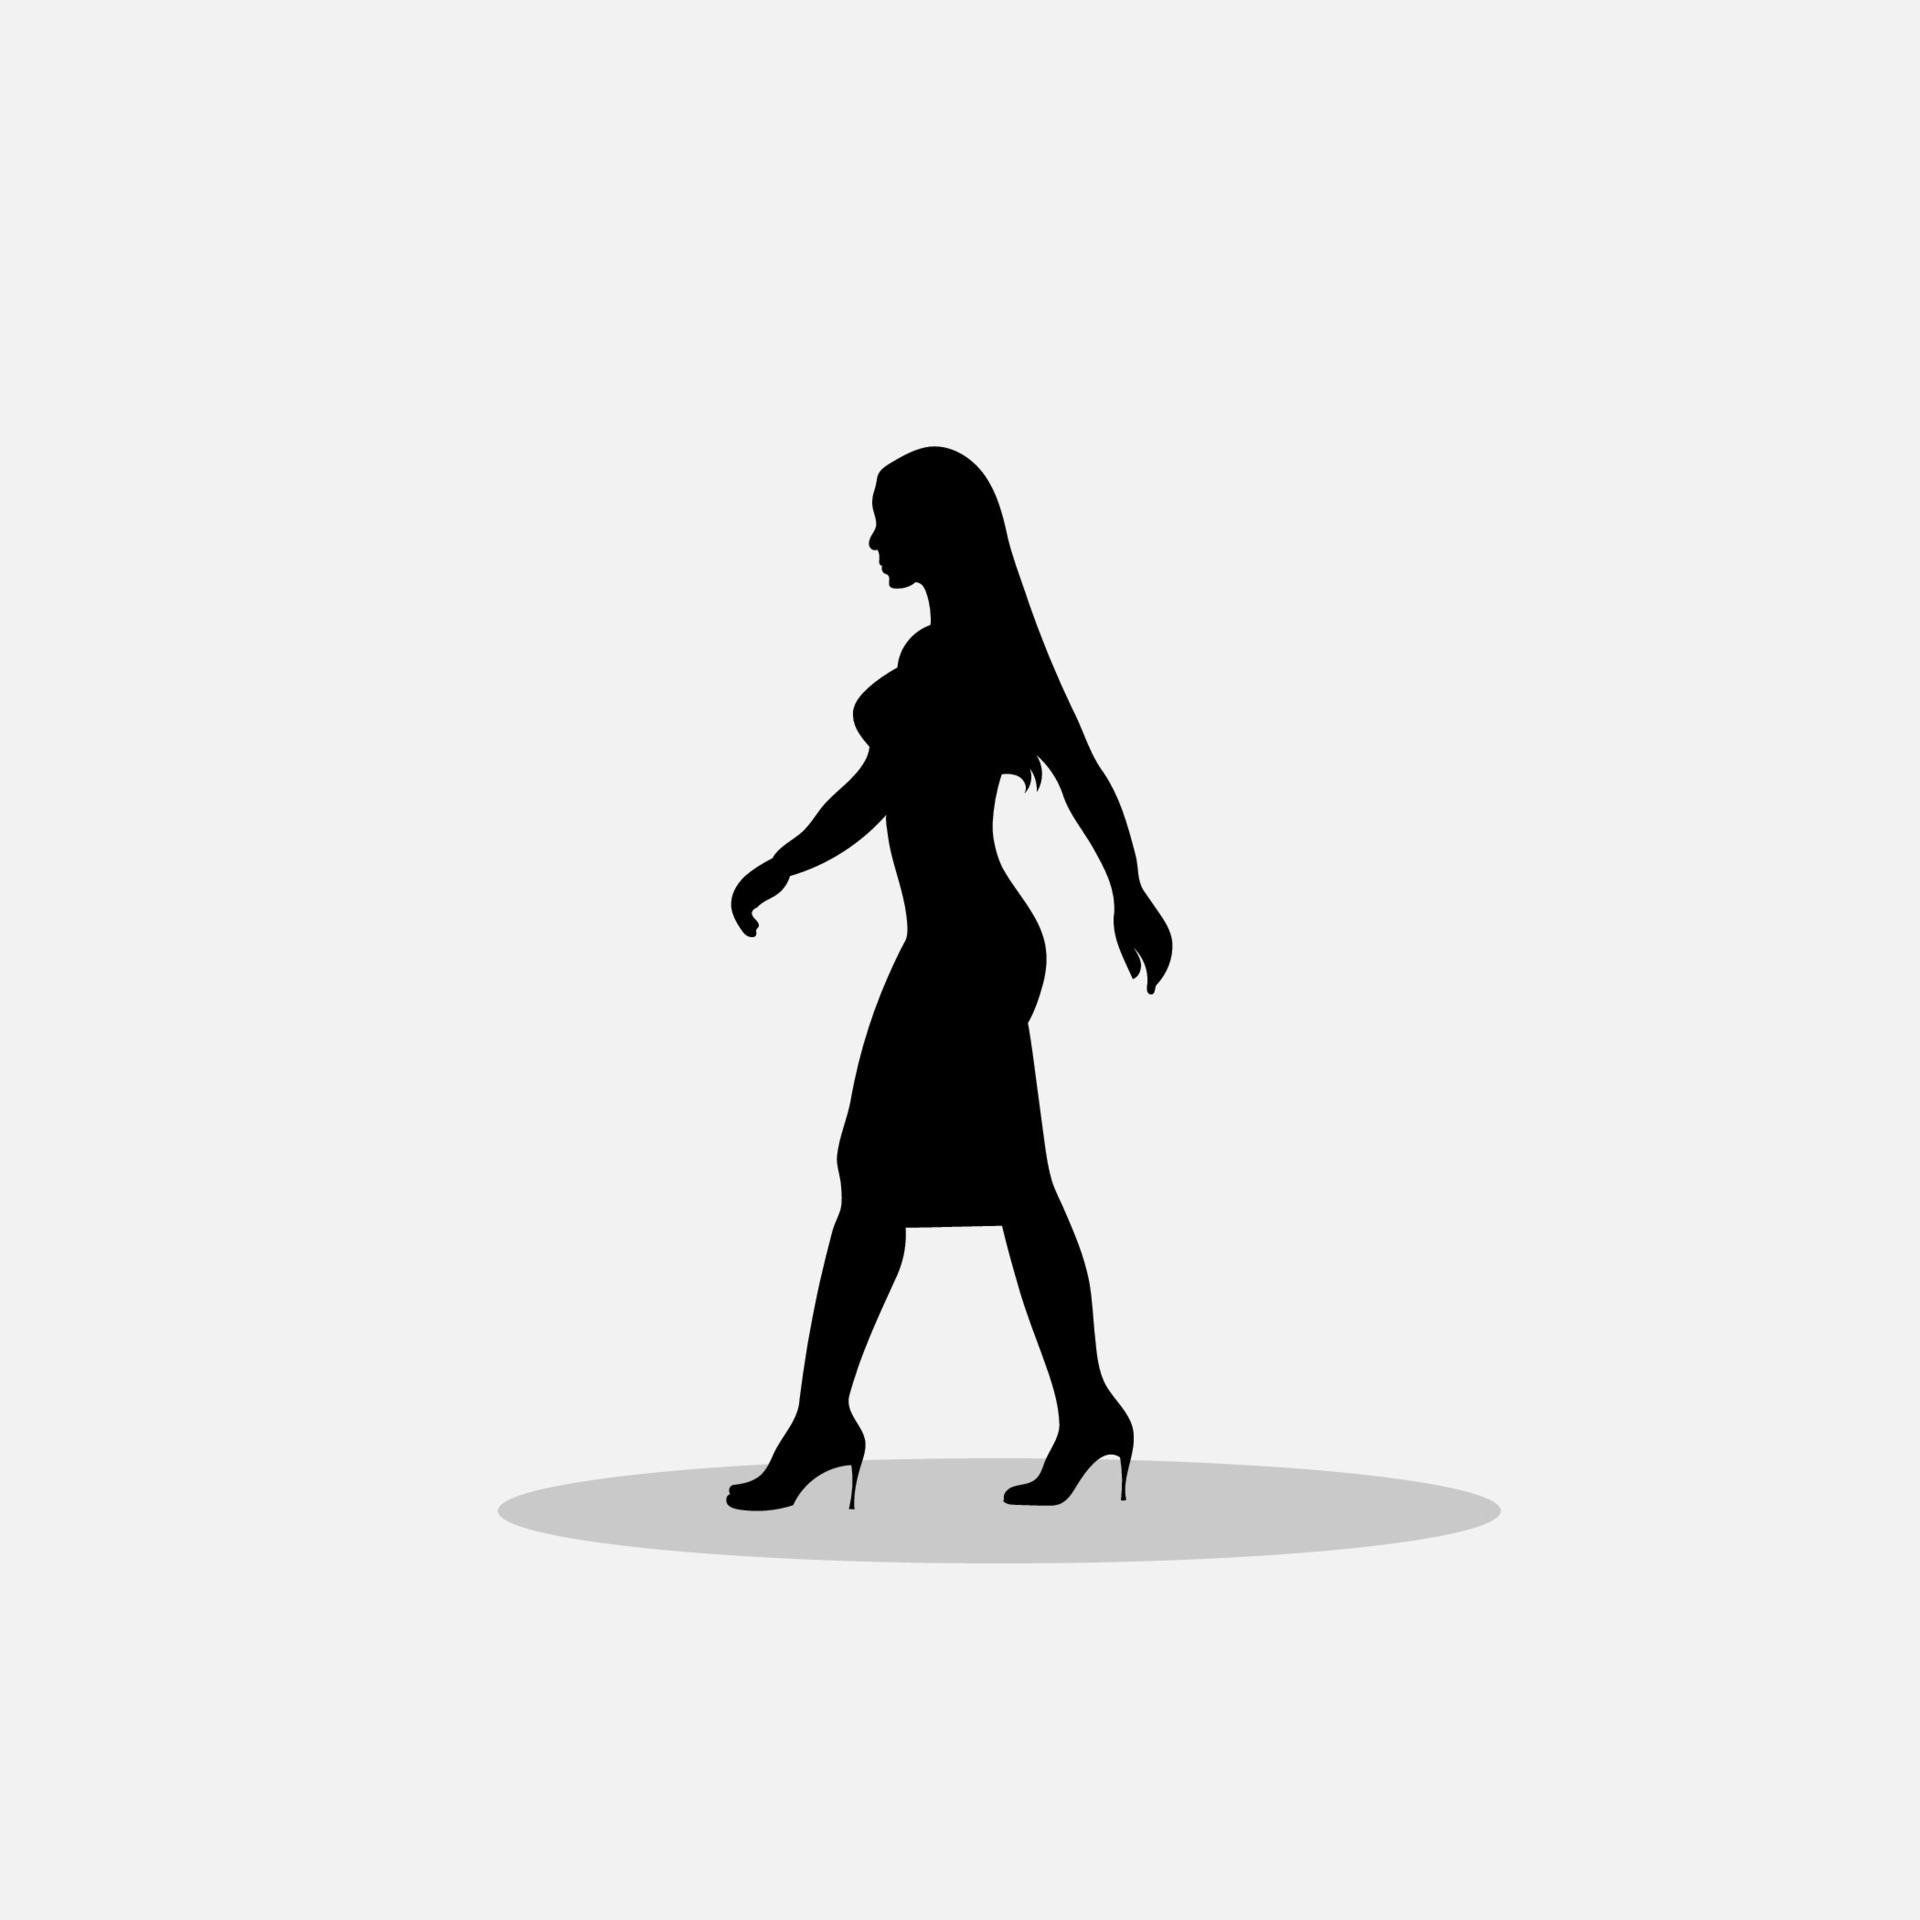 https://static.vecteezy.com/system/resources/previews/030/720/860/original/women-walking-png-free-vector.jpg